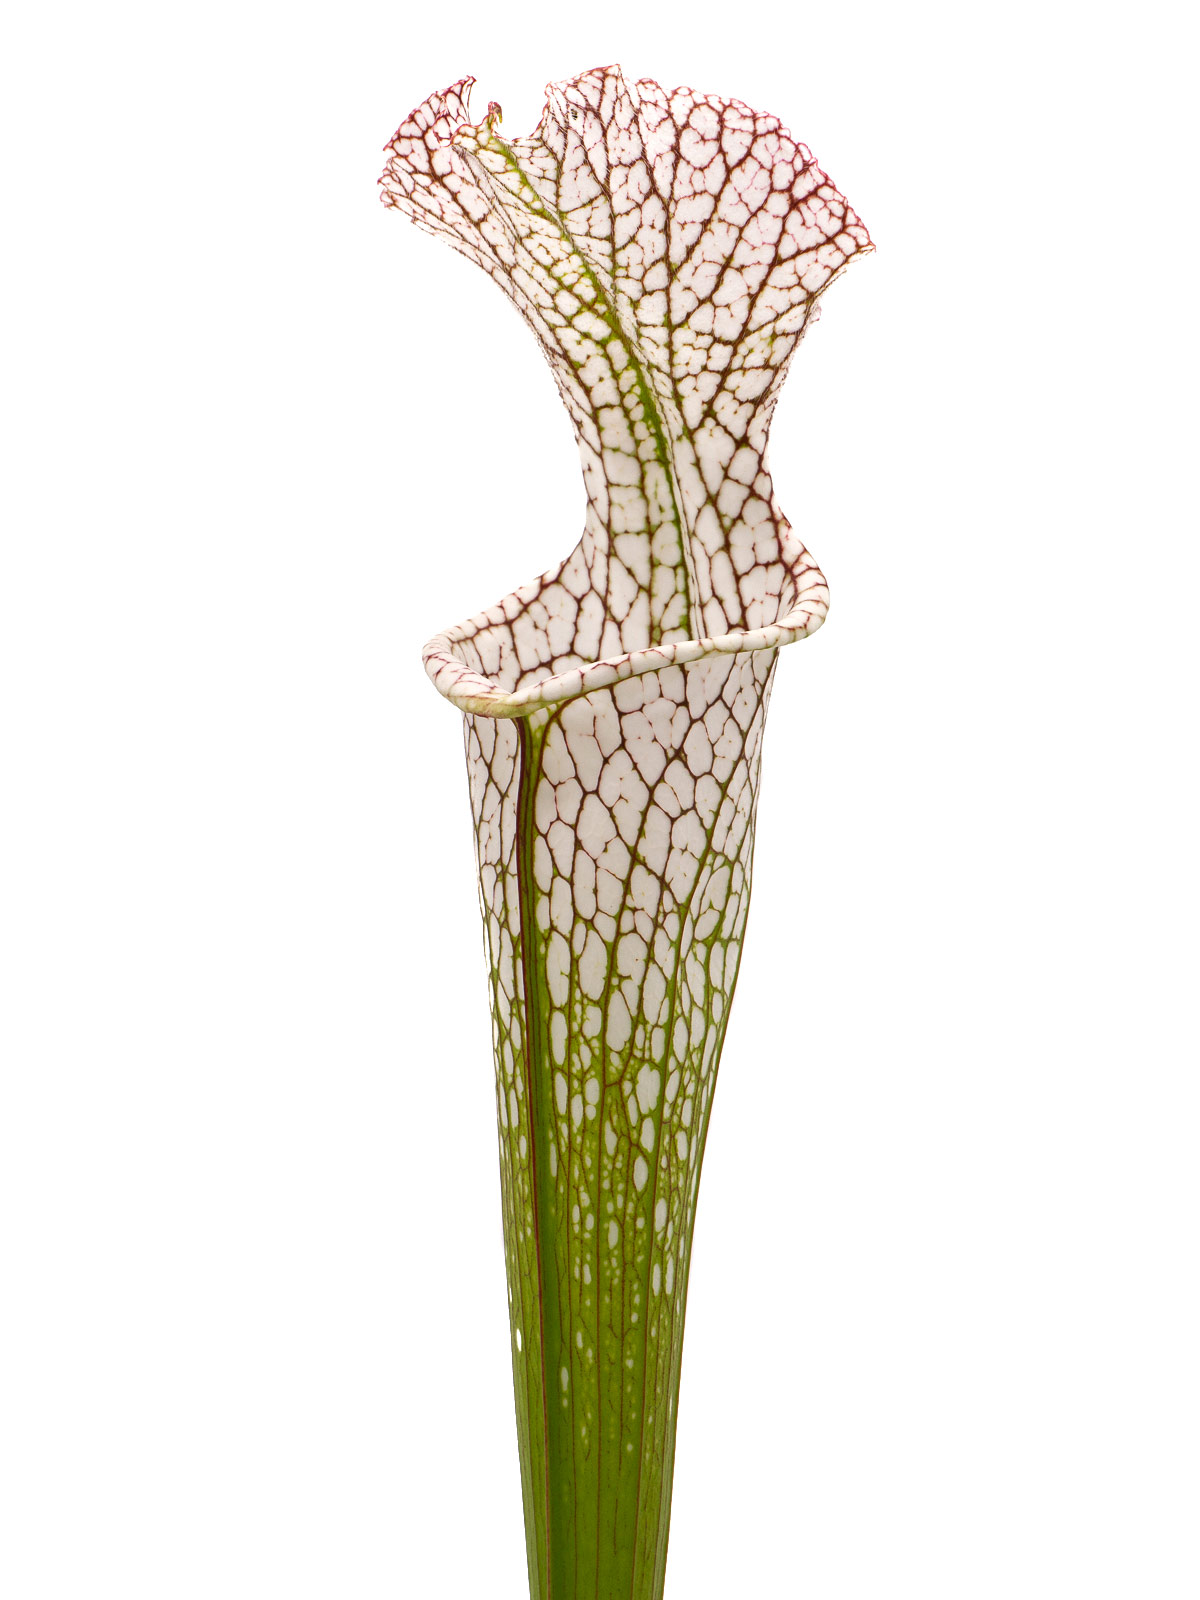 Sarracenia leucophylla - very tall grower, EEE 2011